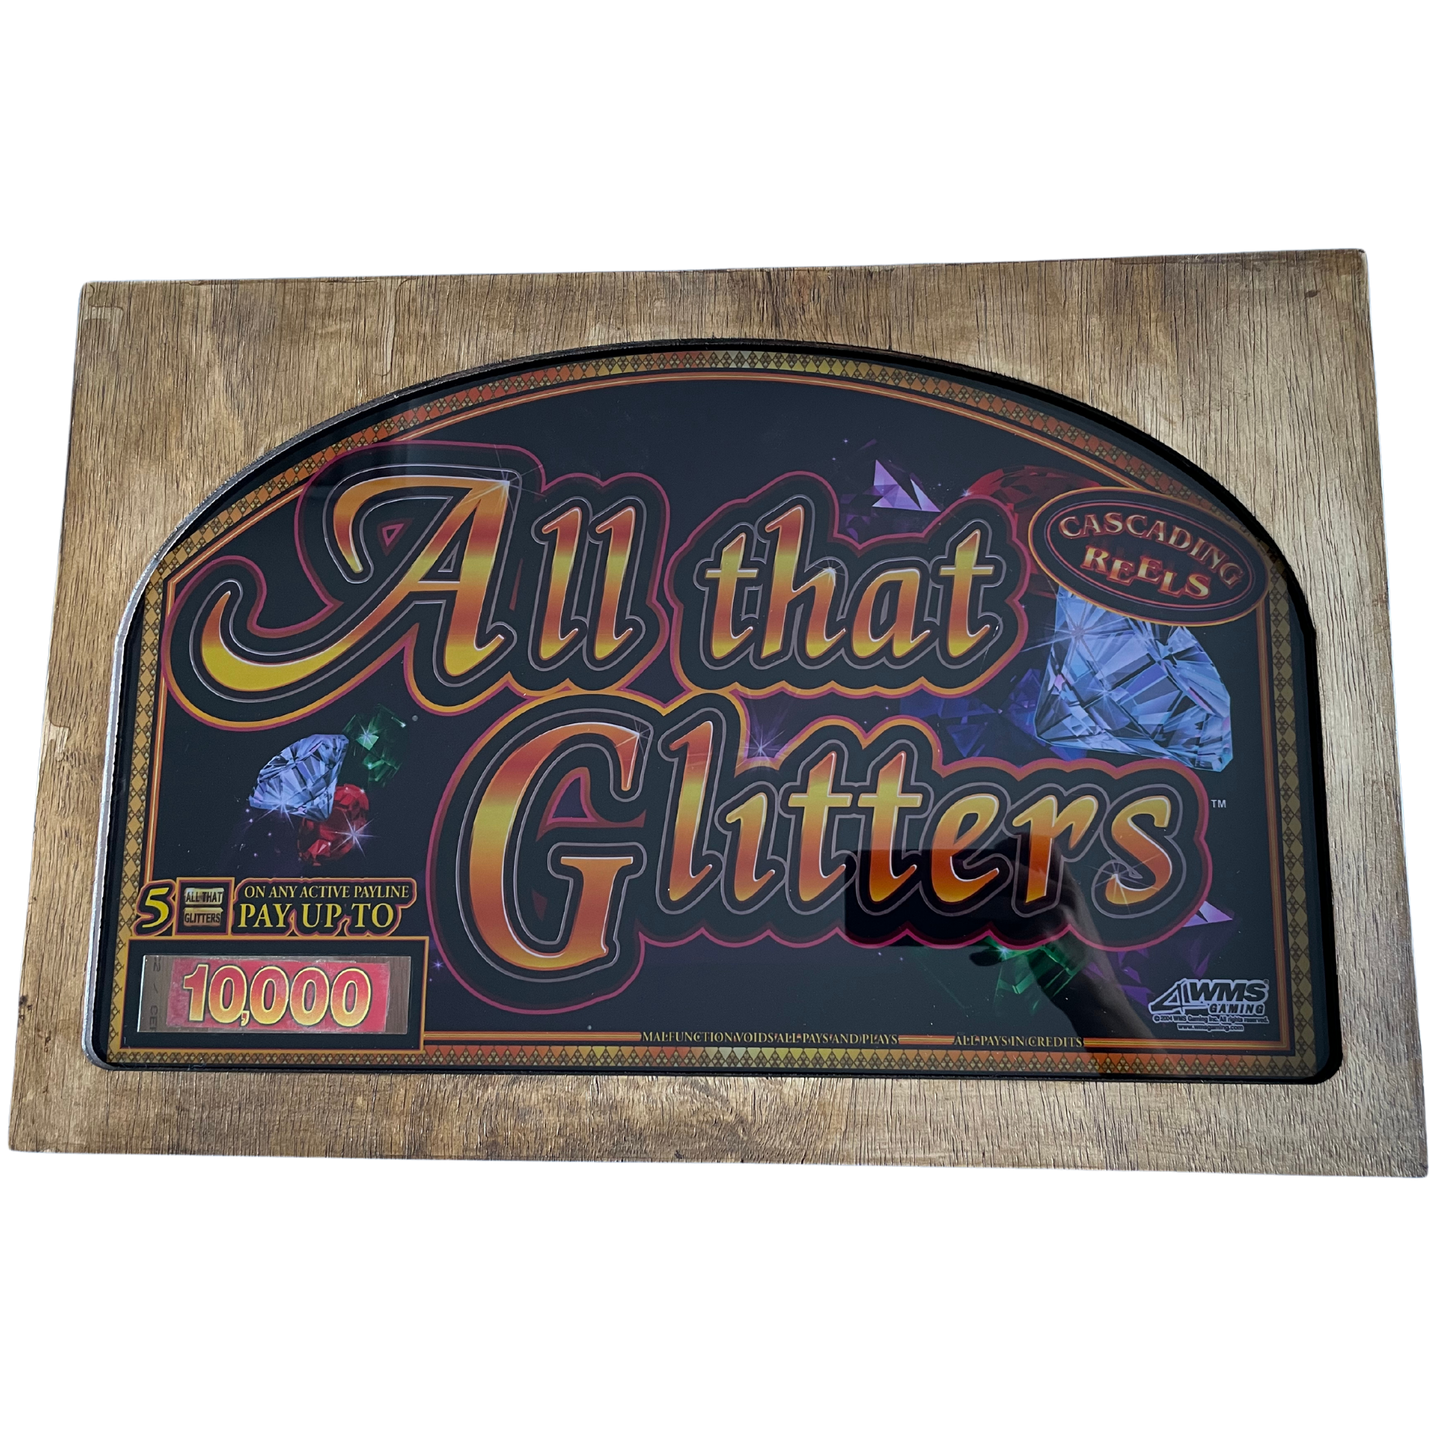 All That Glitters Slot Glass